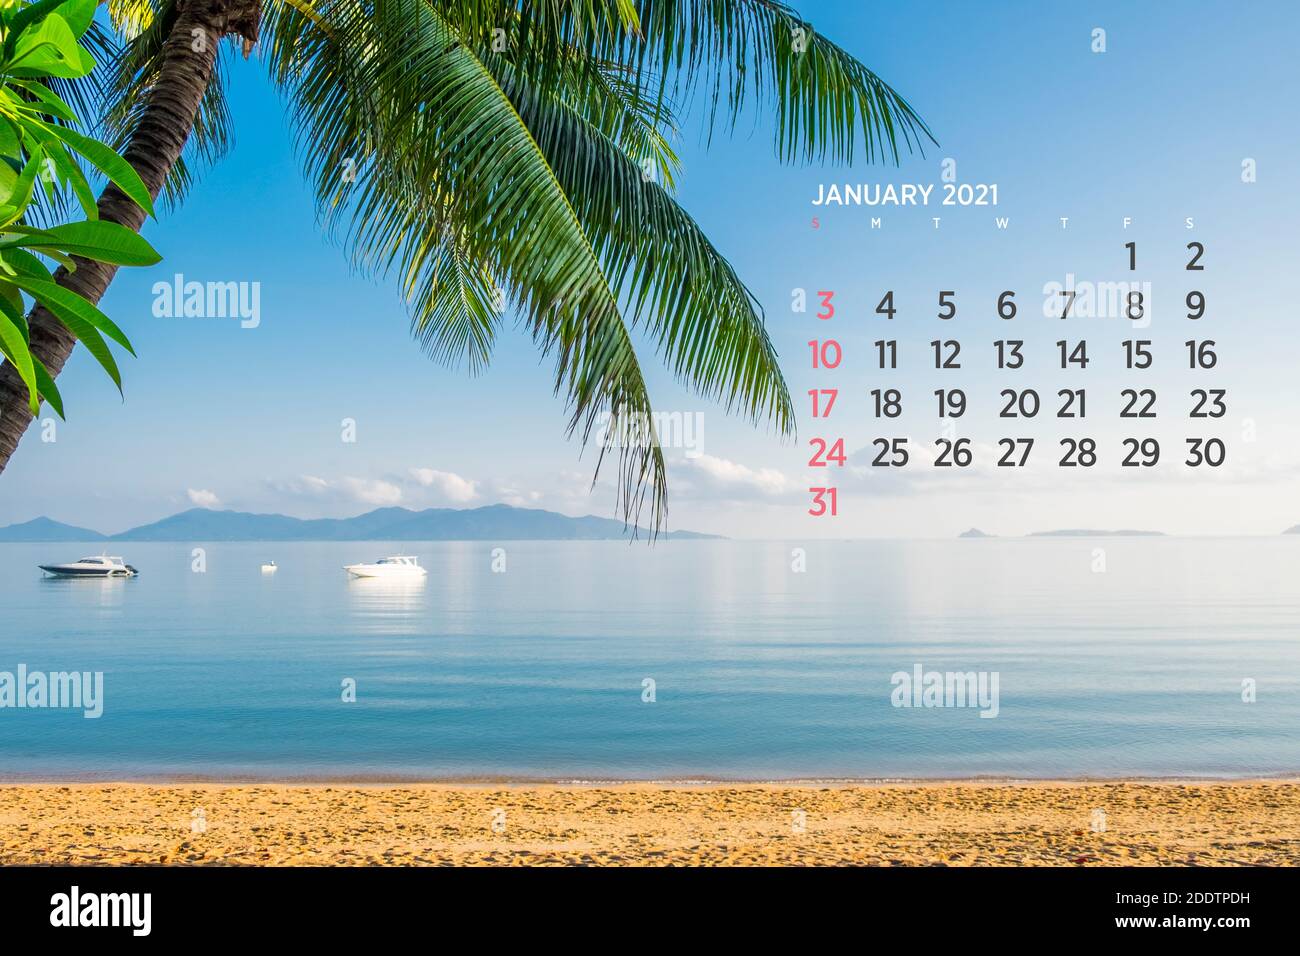 Calendario Enero 2021. Mar, océano, playa, tropical, tema de la naturaleza. A2. 60 x 40 cm. 15.75 x 23.62 pulgadas Foto de stock